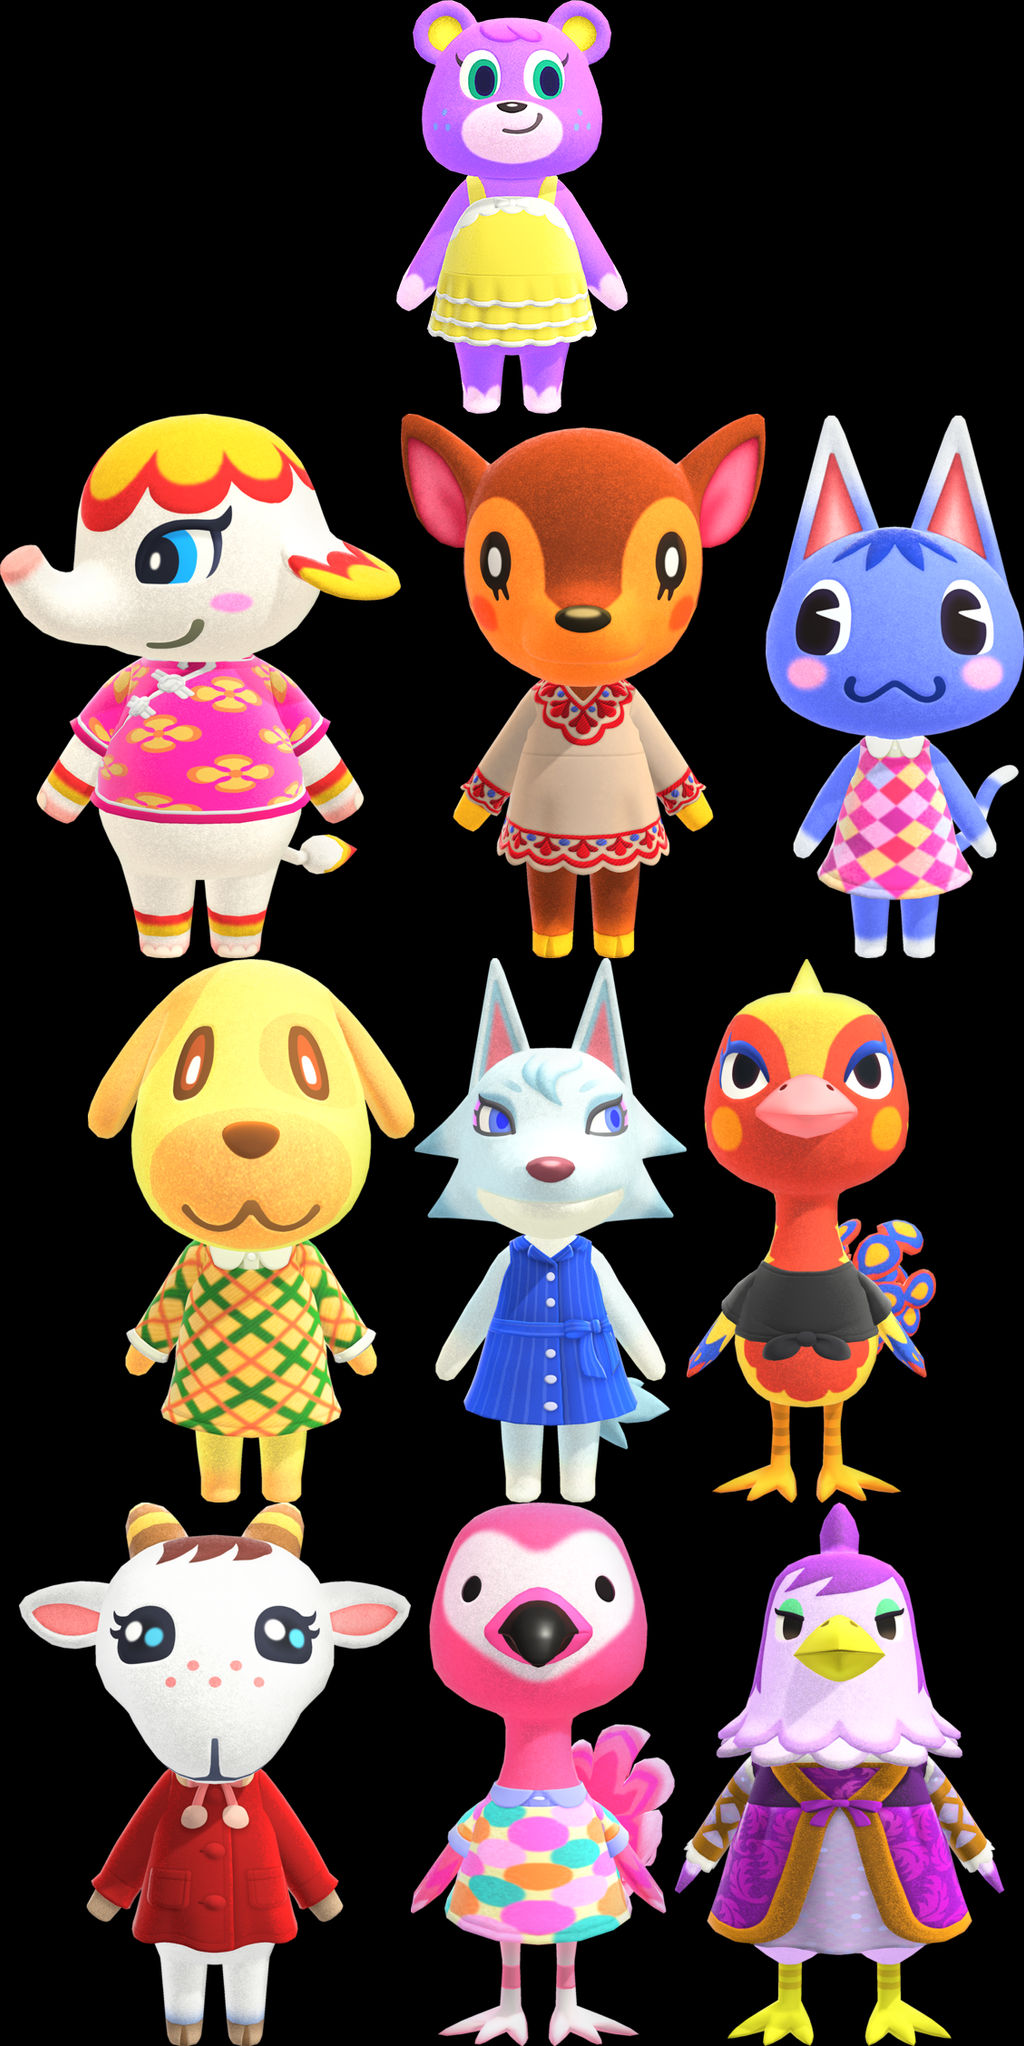 My Animal Crossing New Horizons Villagers by Elsie1234 on DeviantArt